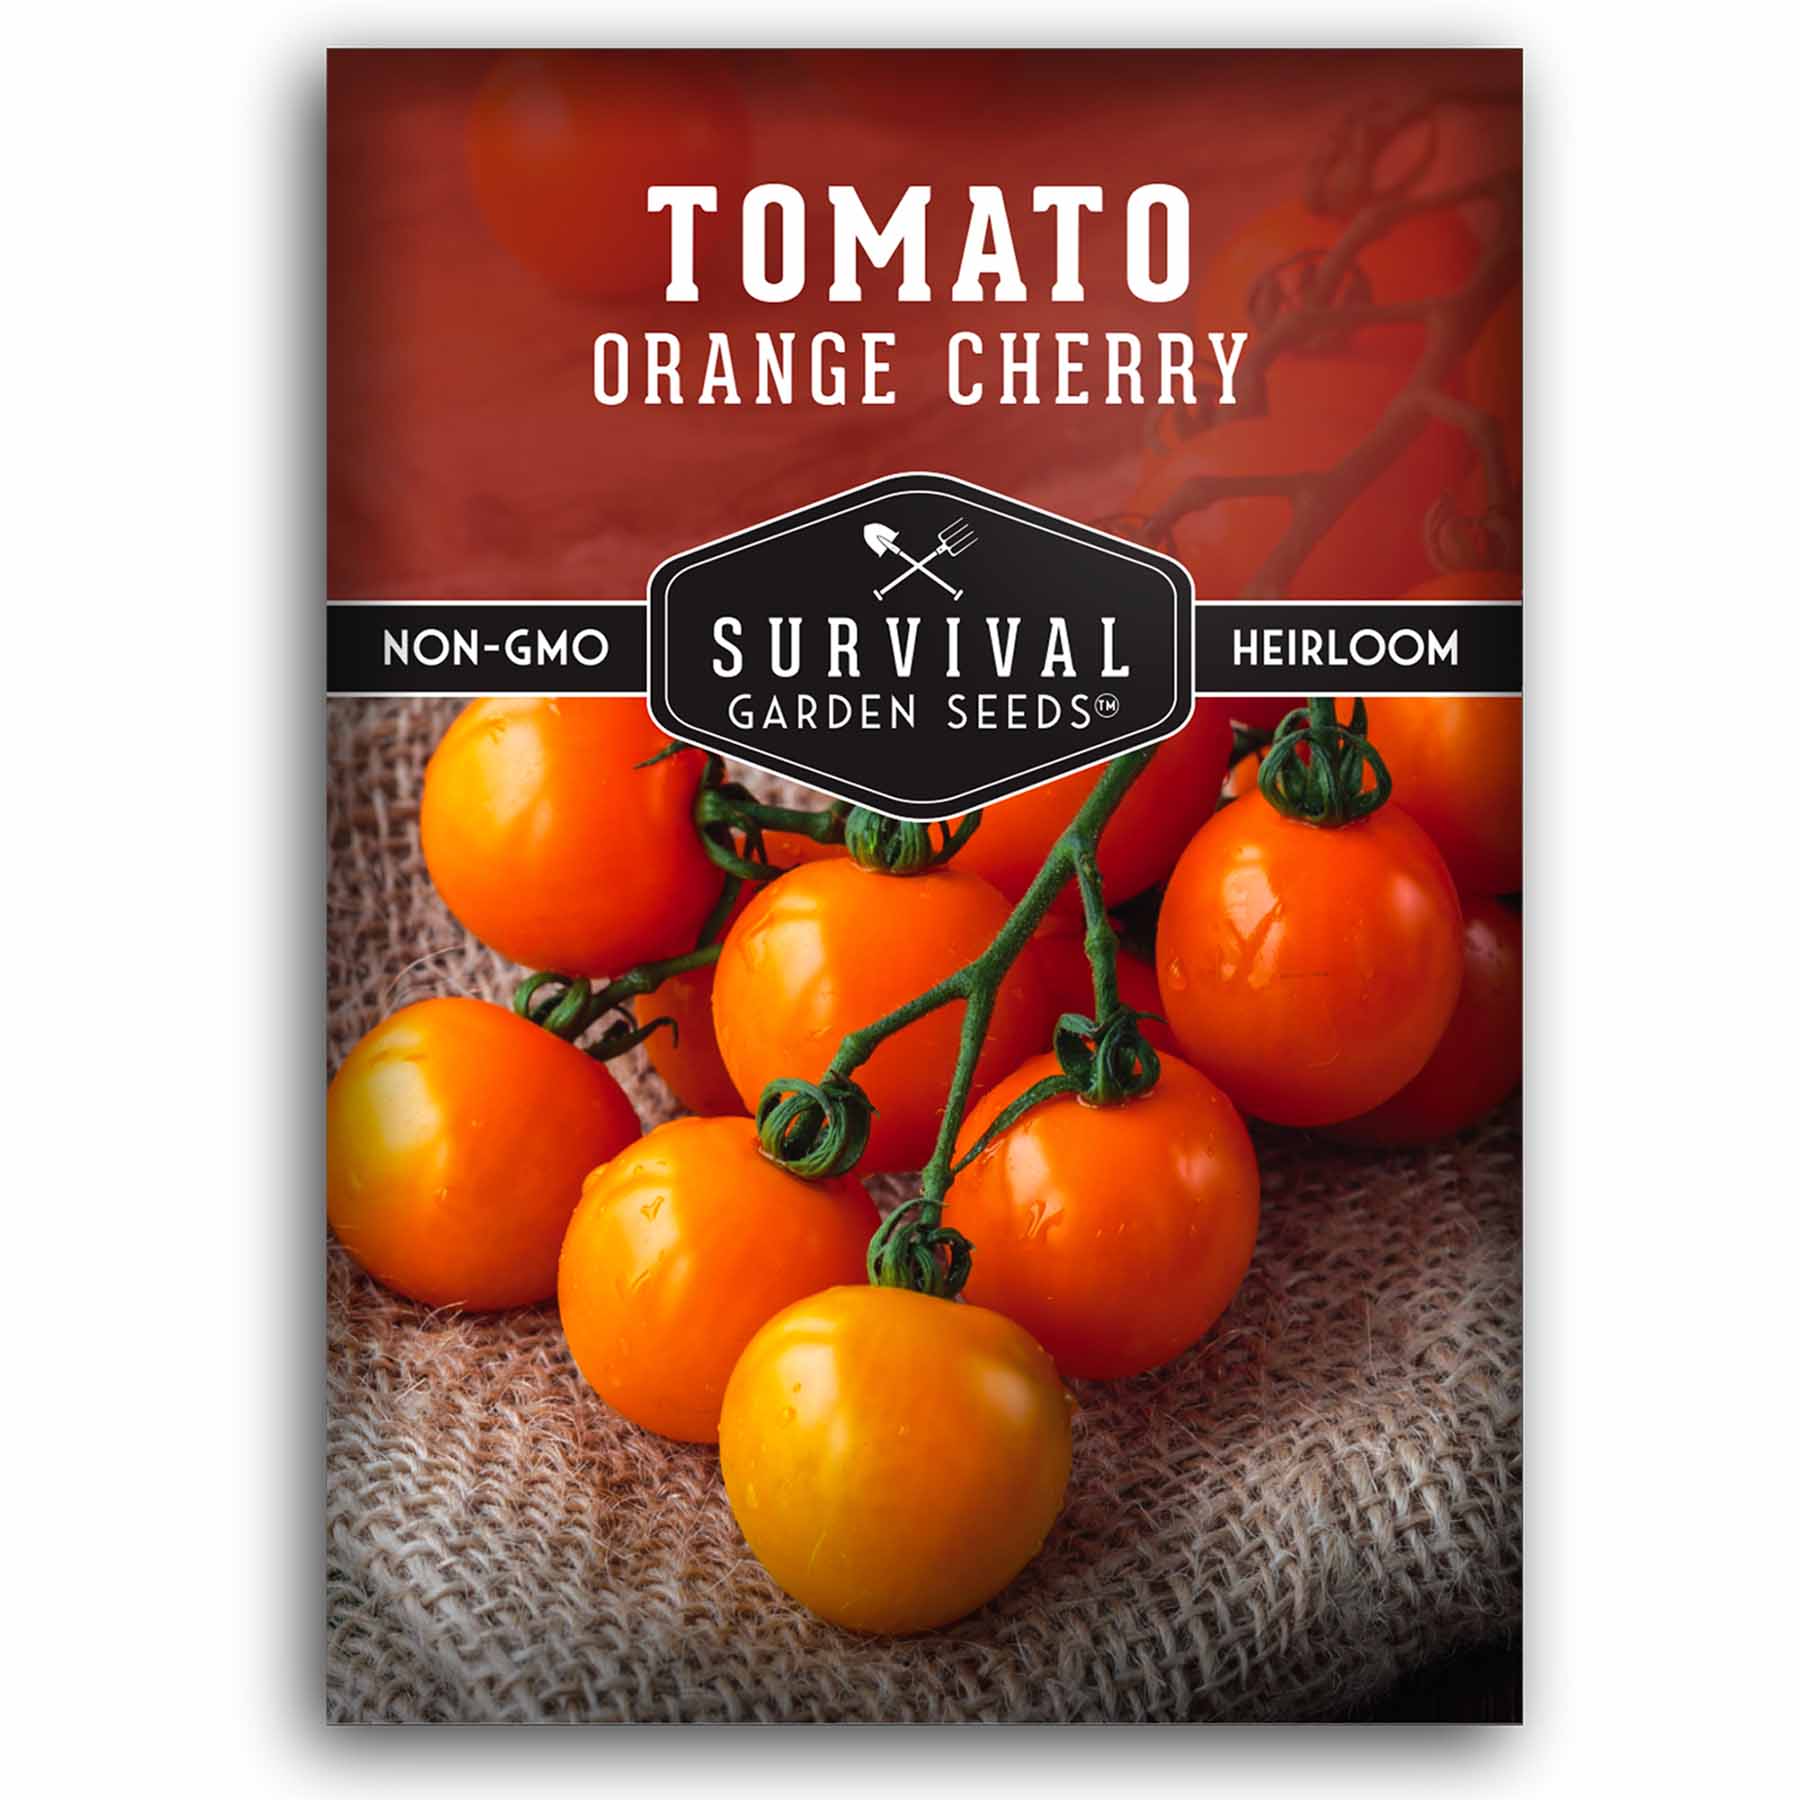 1 packet of Orange Cherry Tomato seeds